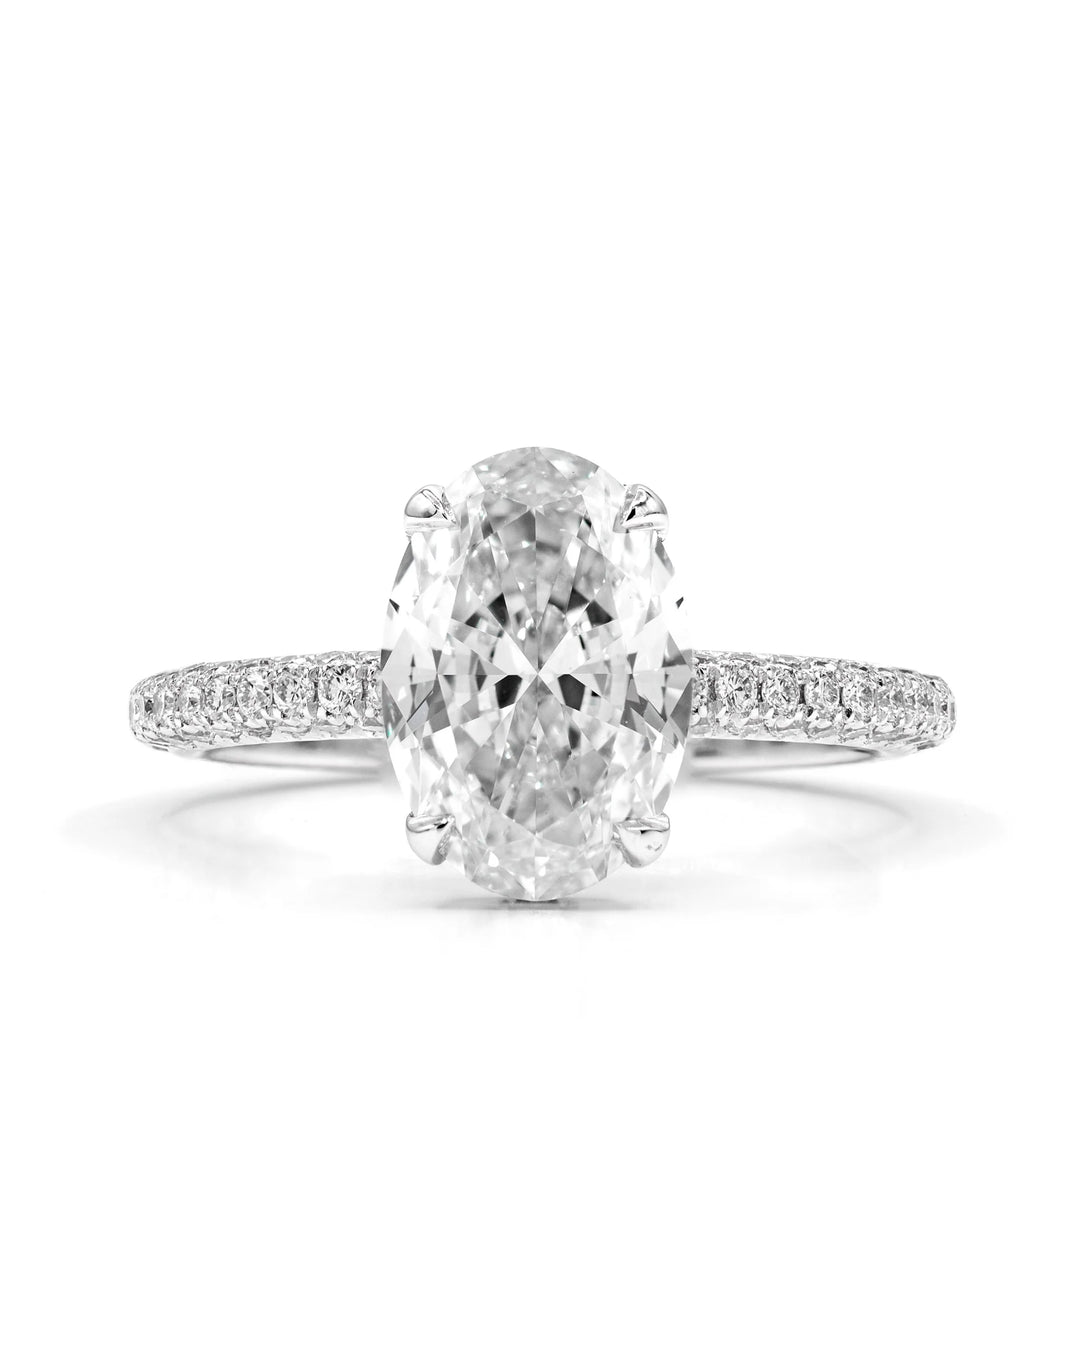 How to Choose Quality Diamond Jewelry